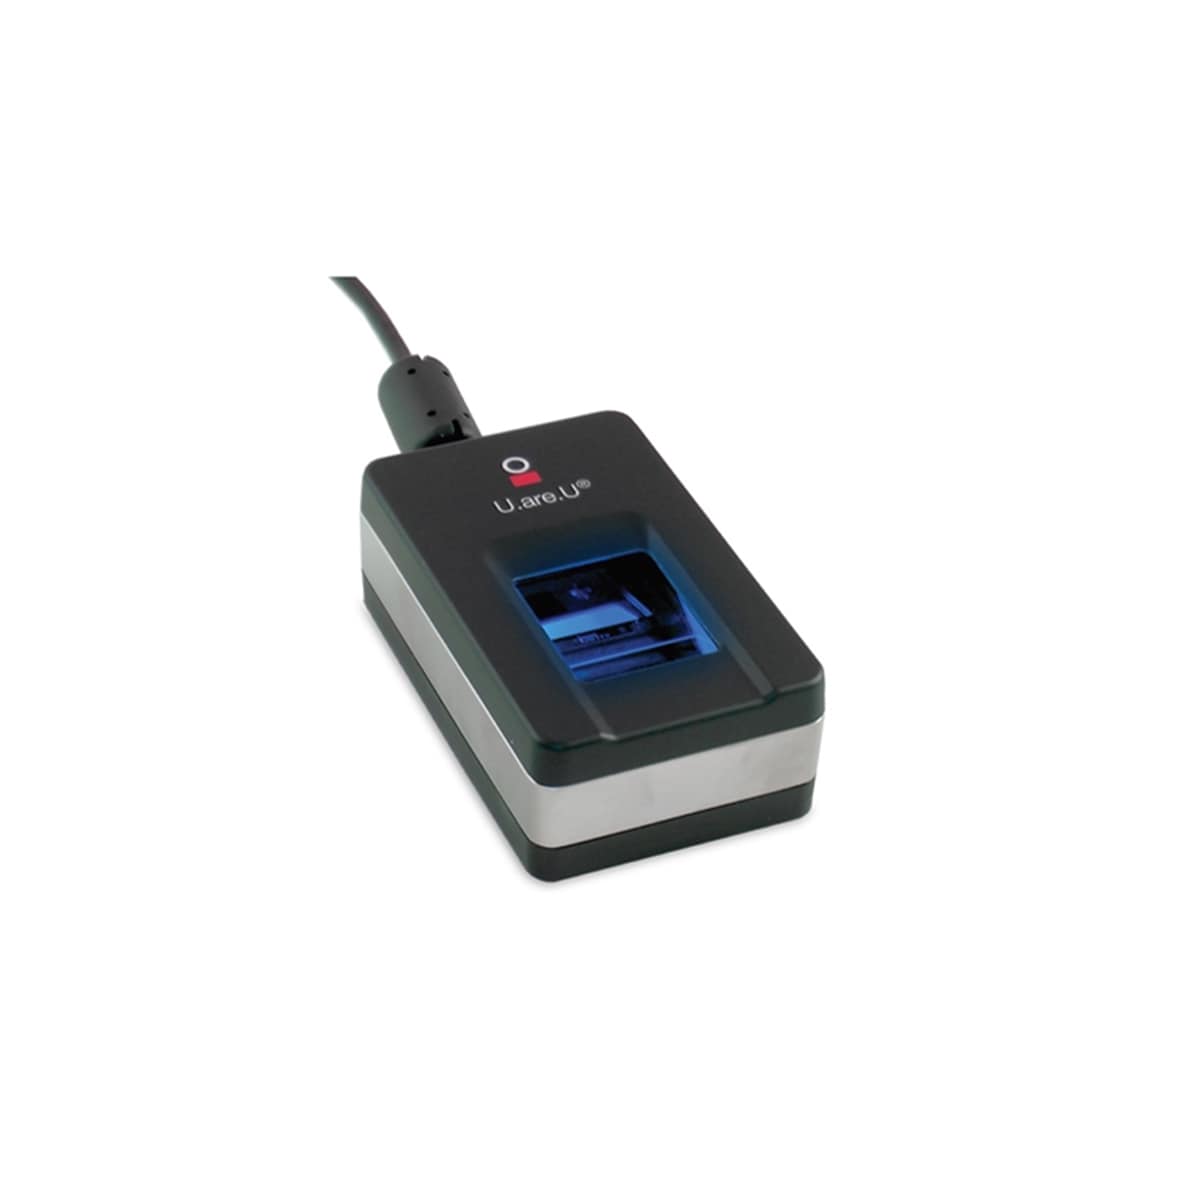 Crossmatch U.are.U 5300 FIPS 201/PIV, FAP 30 Certified USB Fingerprint –  Fulcrum Biometrics, Inc